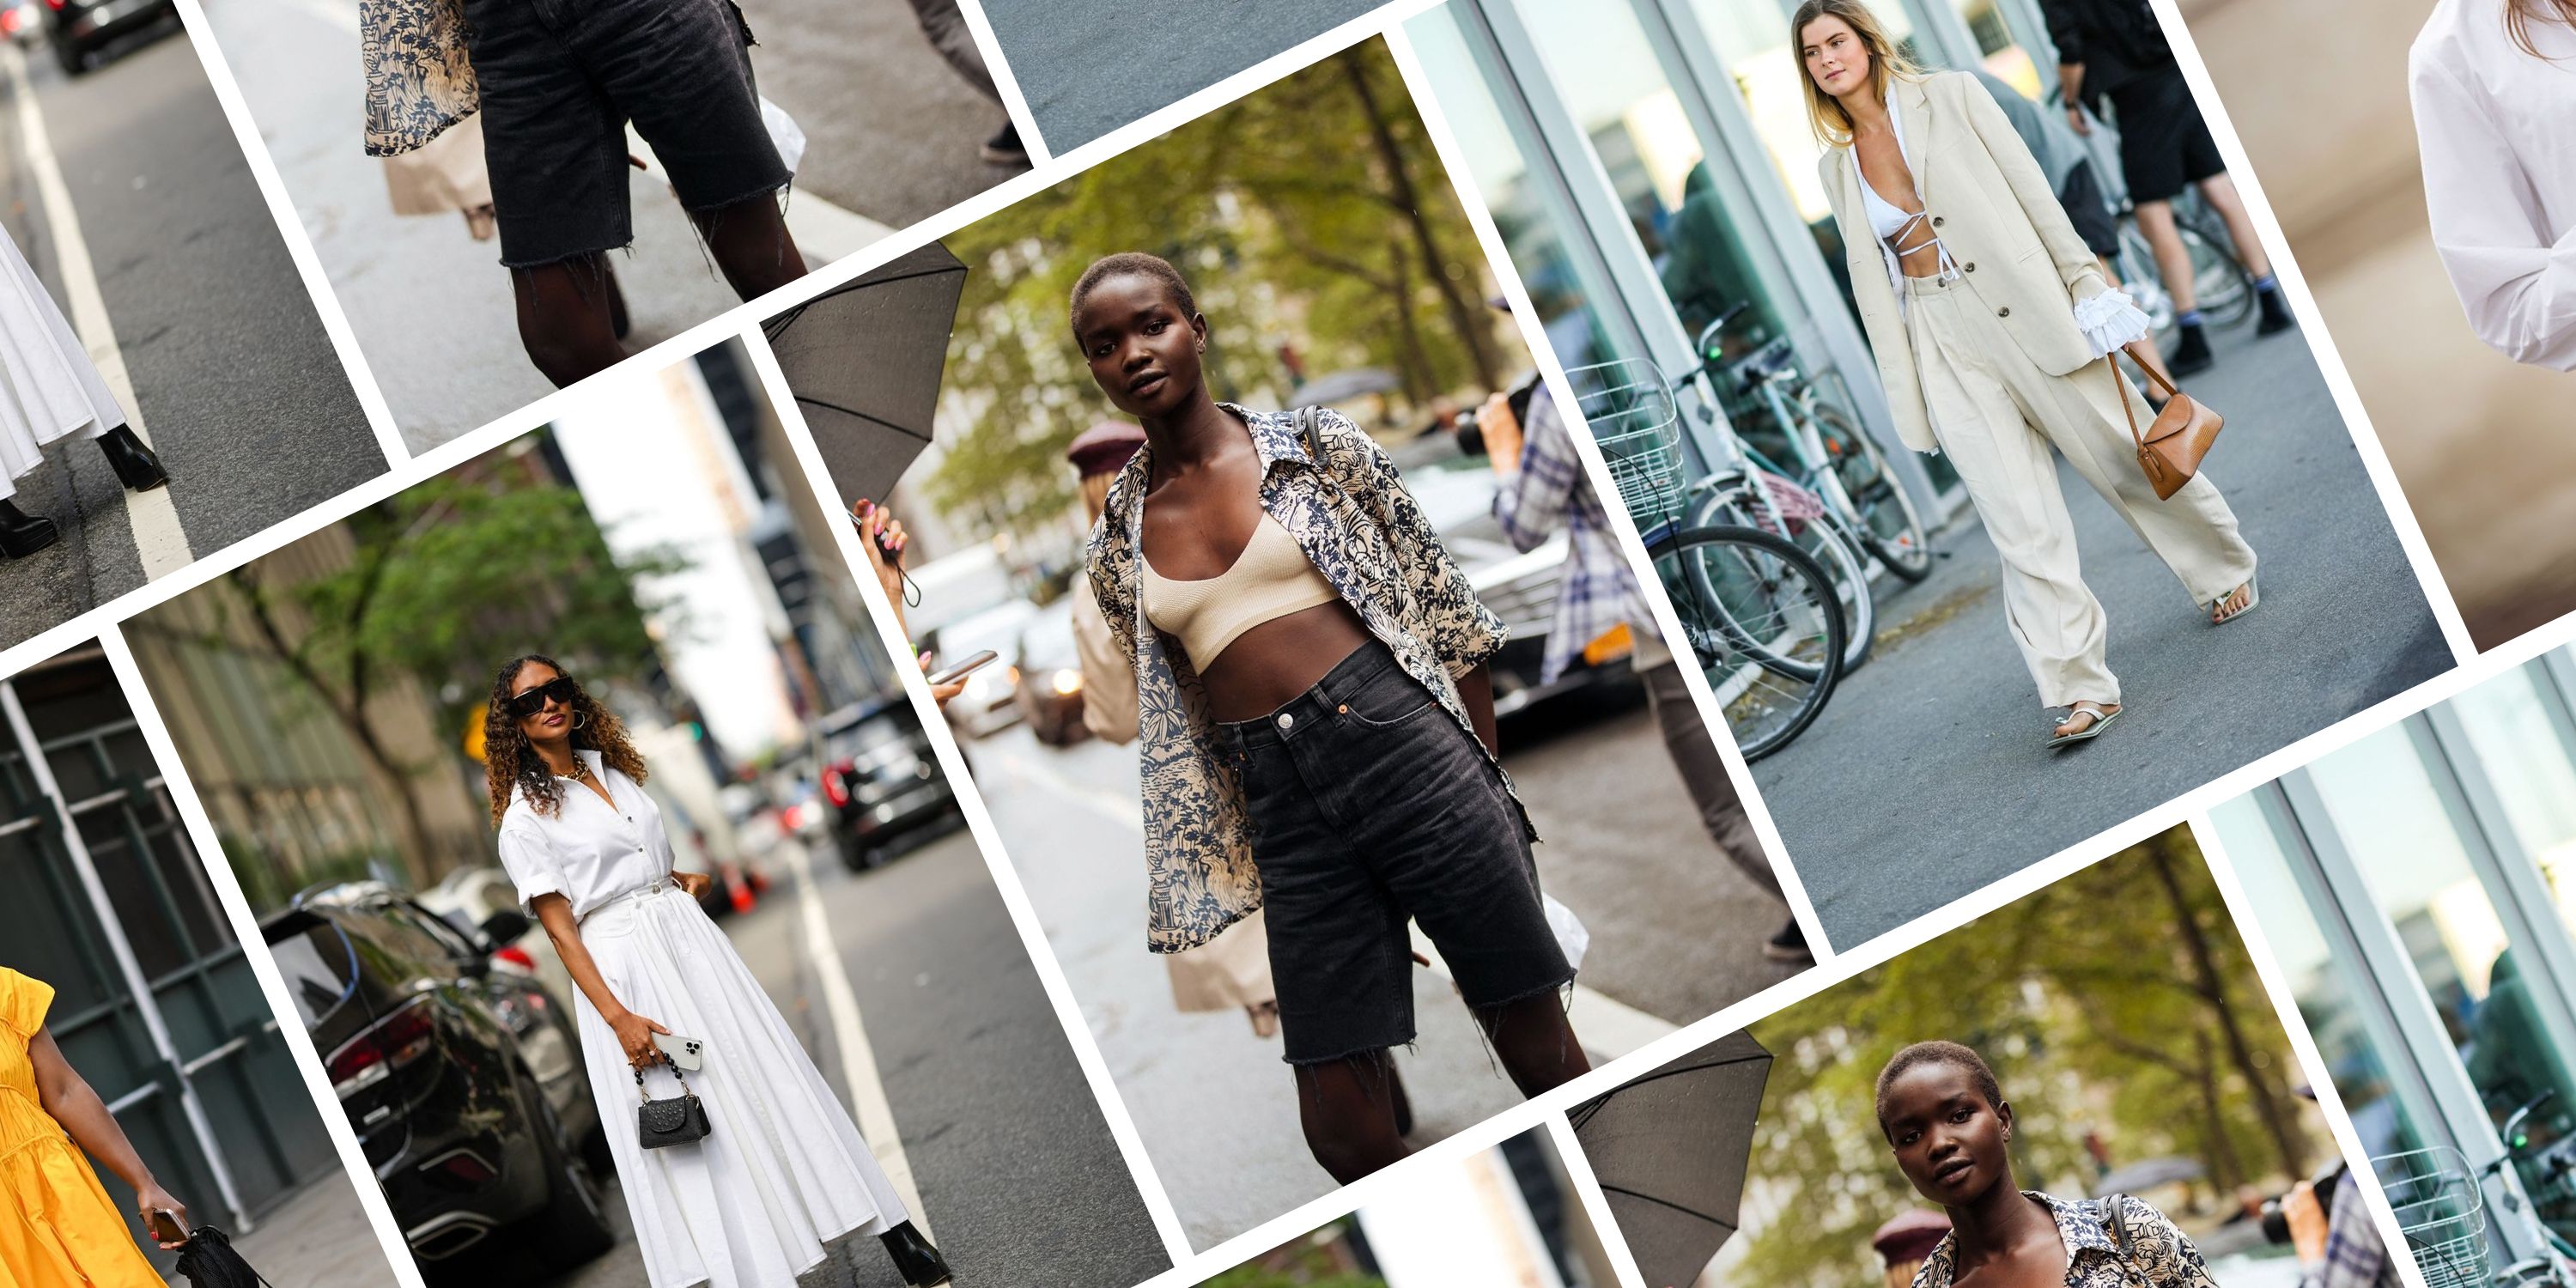 Denim Skirt Outfit Ideas 2019 | POPSUGAR Fashion